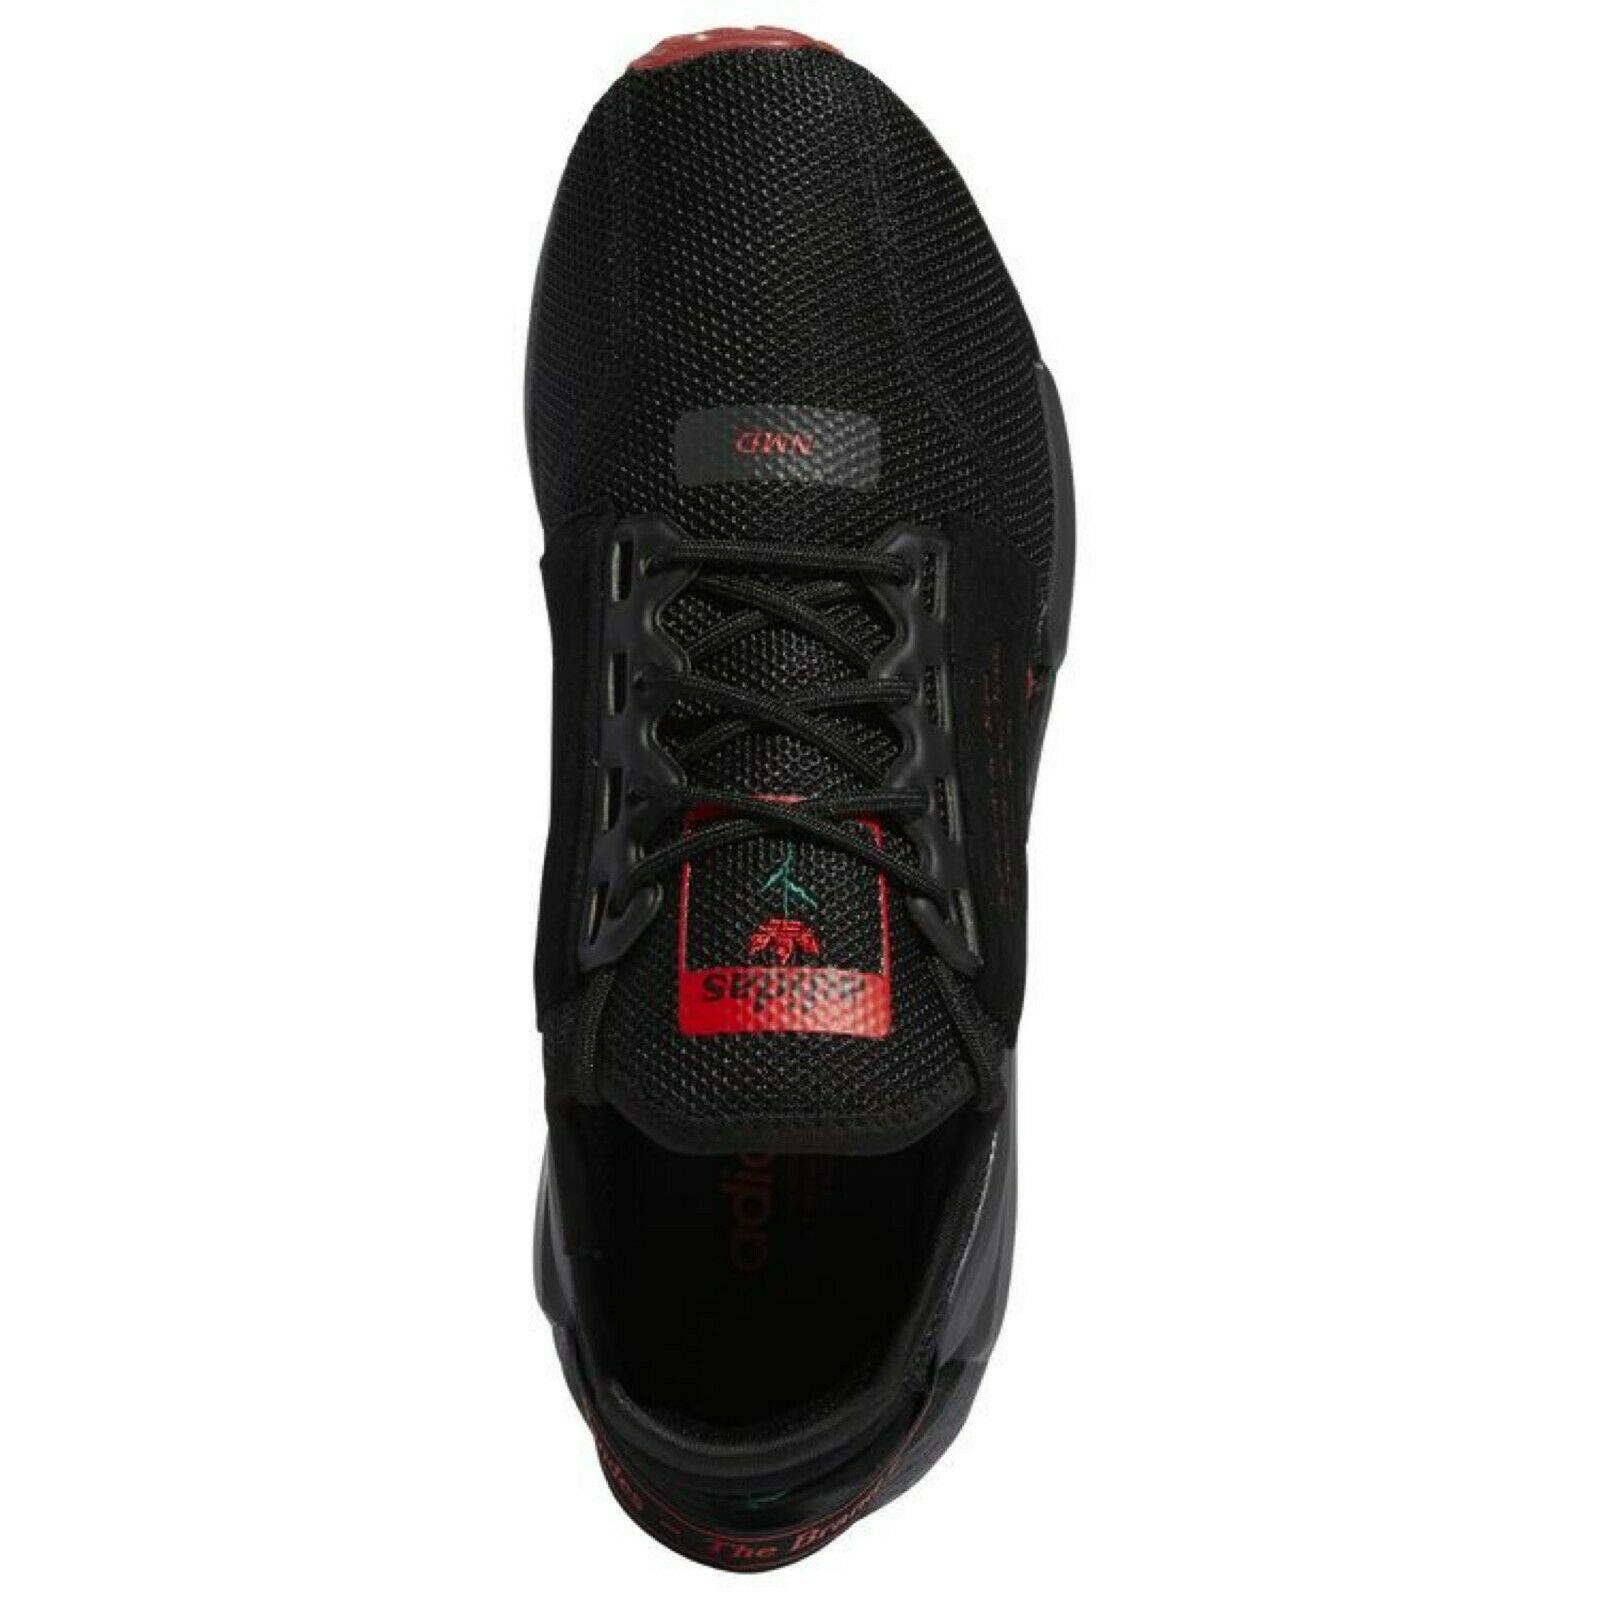 Adidas shoes Originals - Black , Black/Red Manufacturer 8